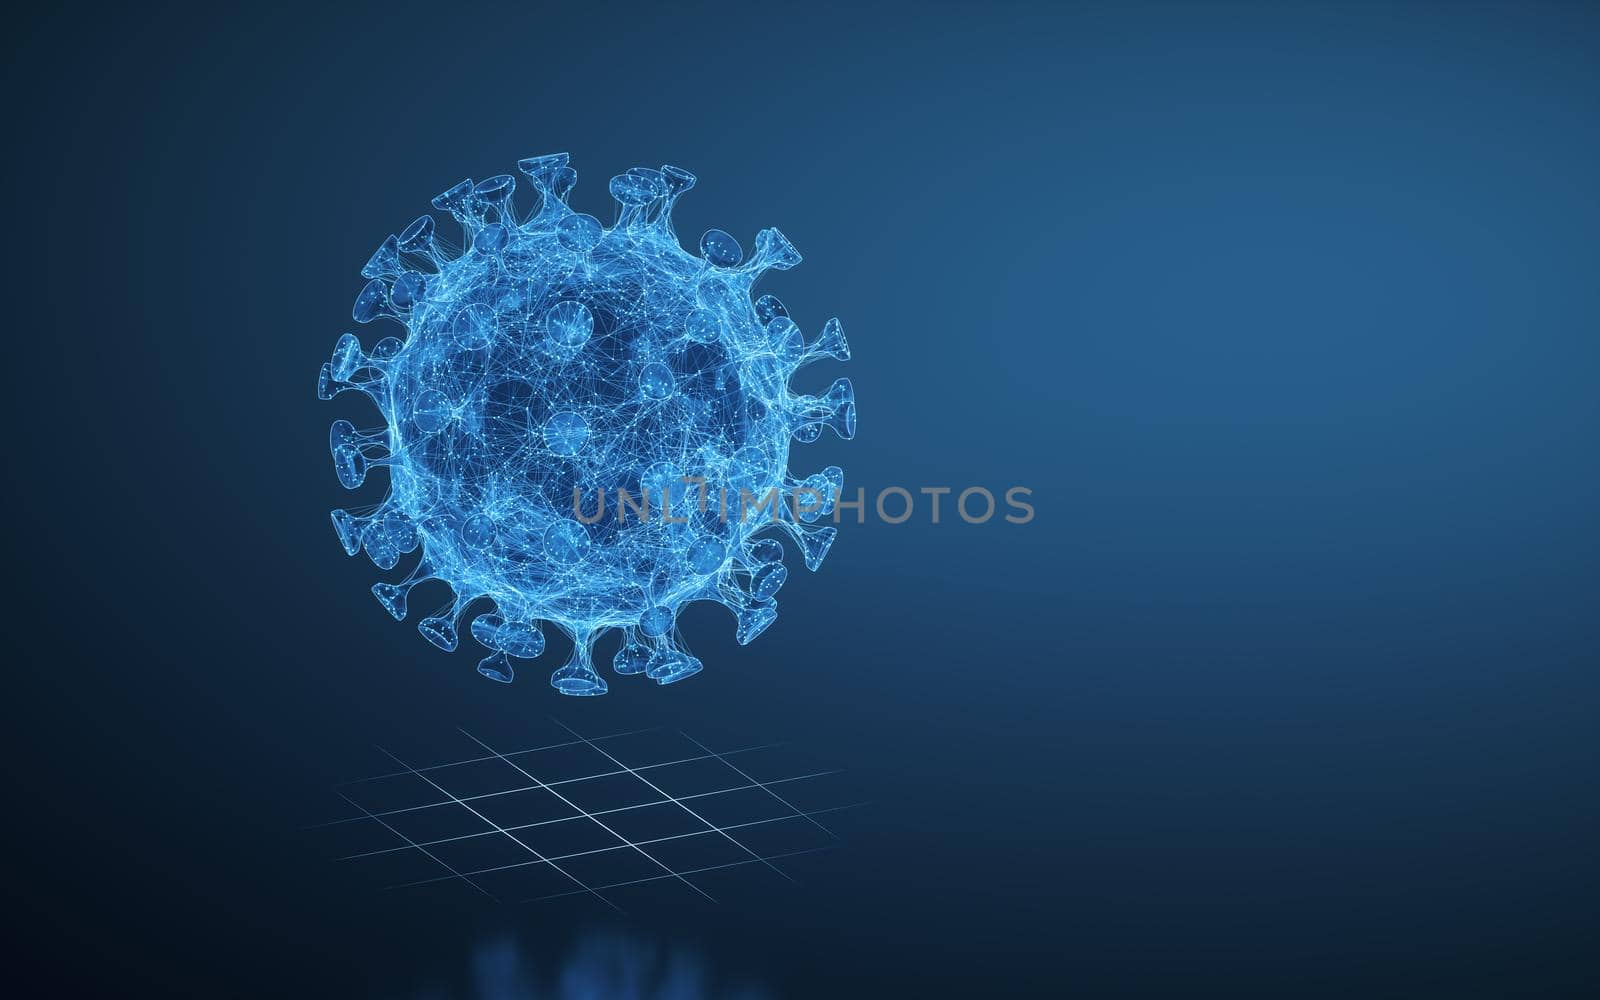 Coronavirus with blue background, 3d rendering. by vinkfan